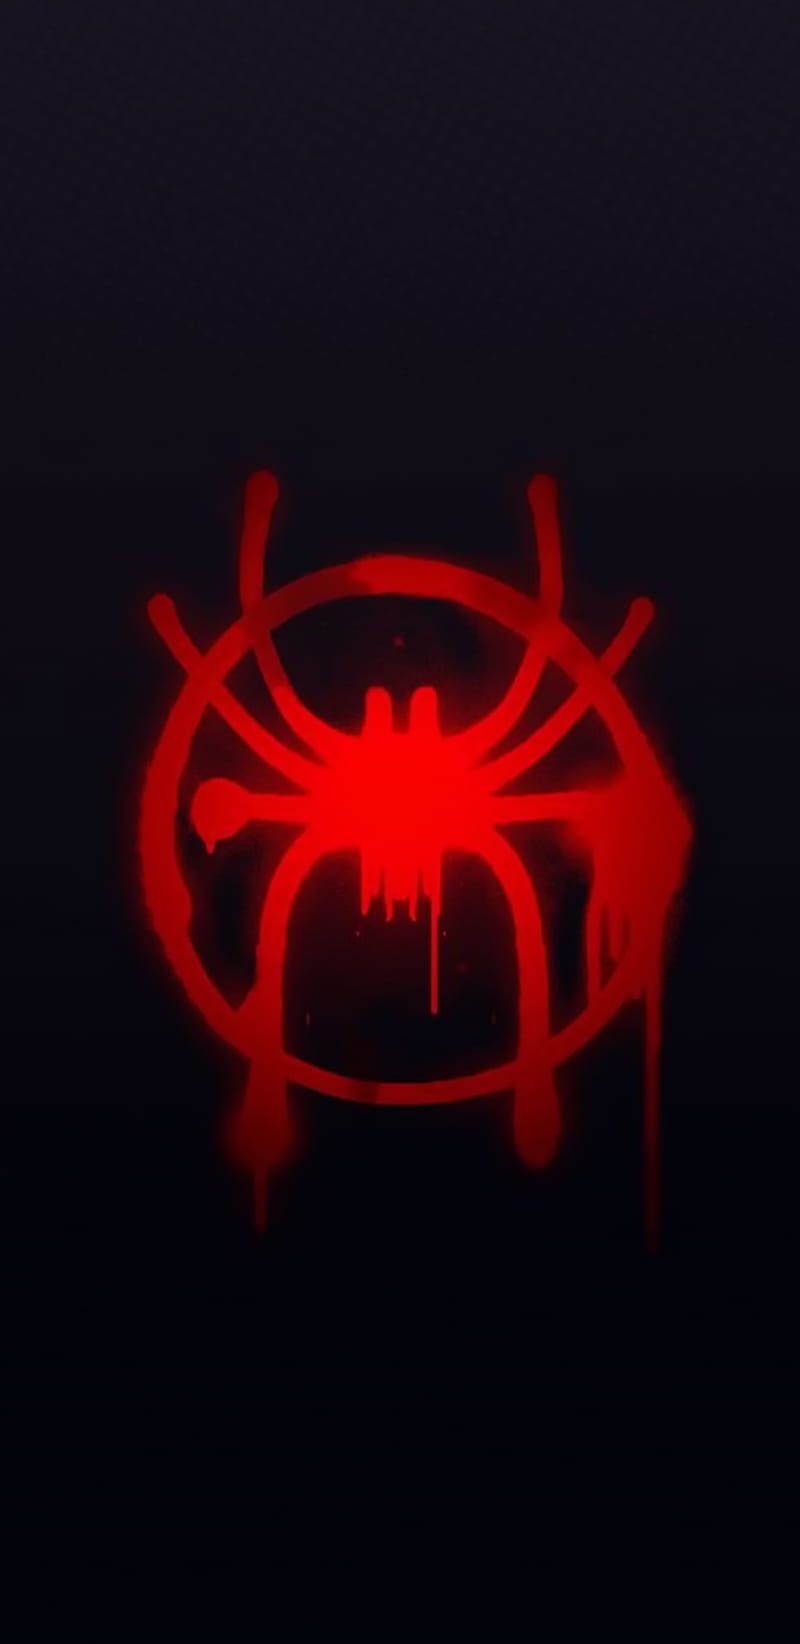 Spider-Man Miles Morales Logo by Spiderbyte64 on DeviantArt